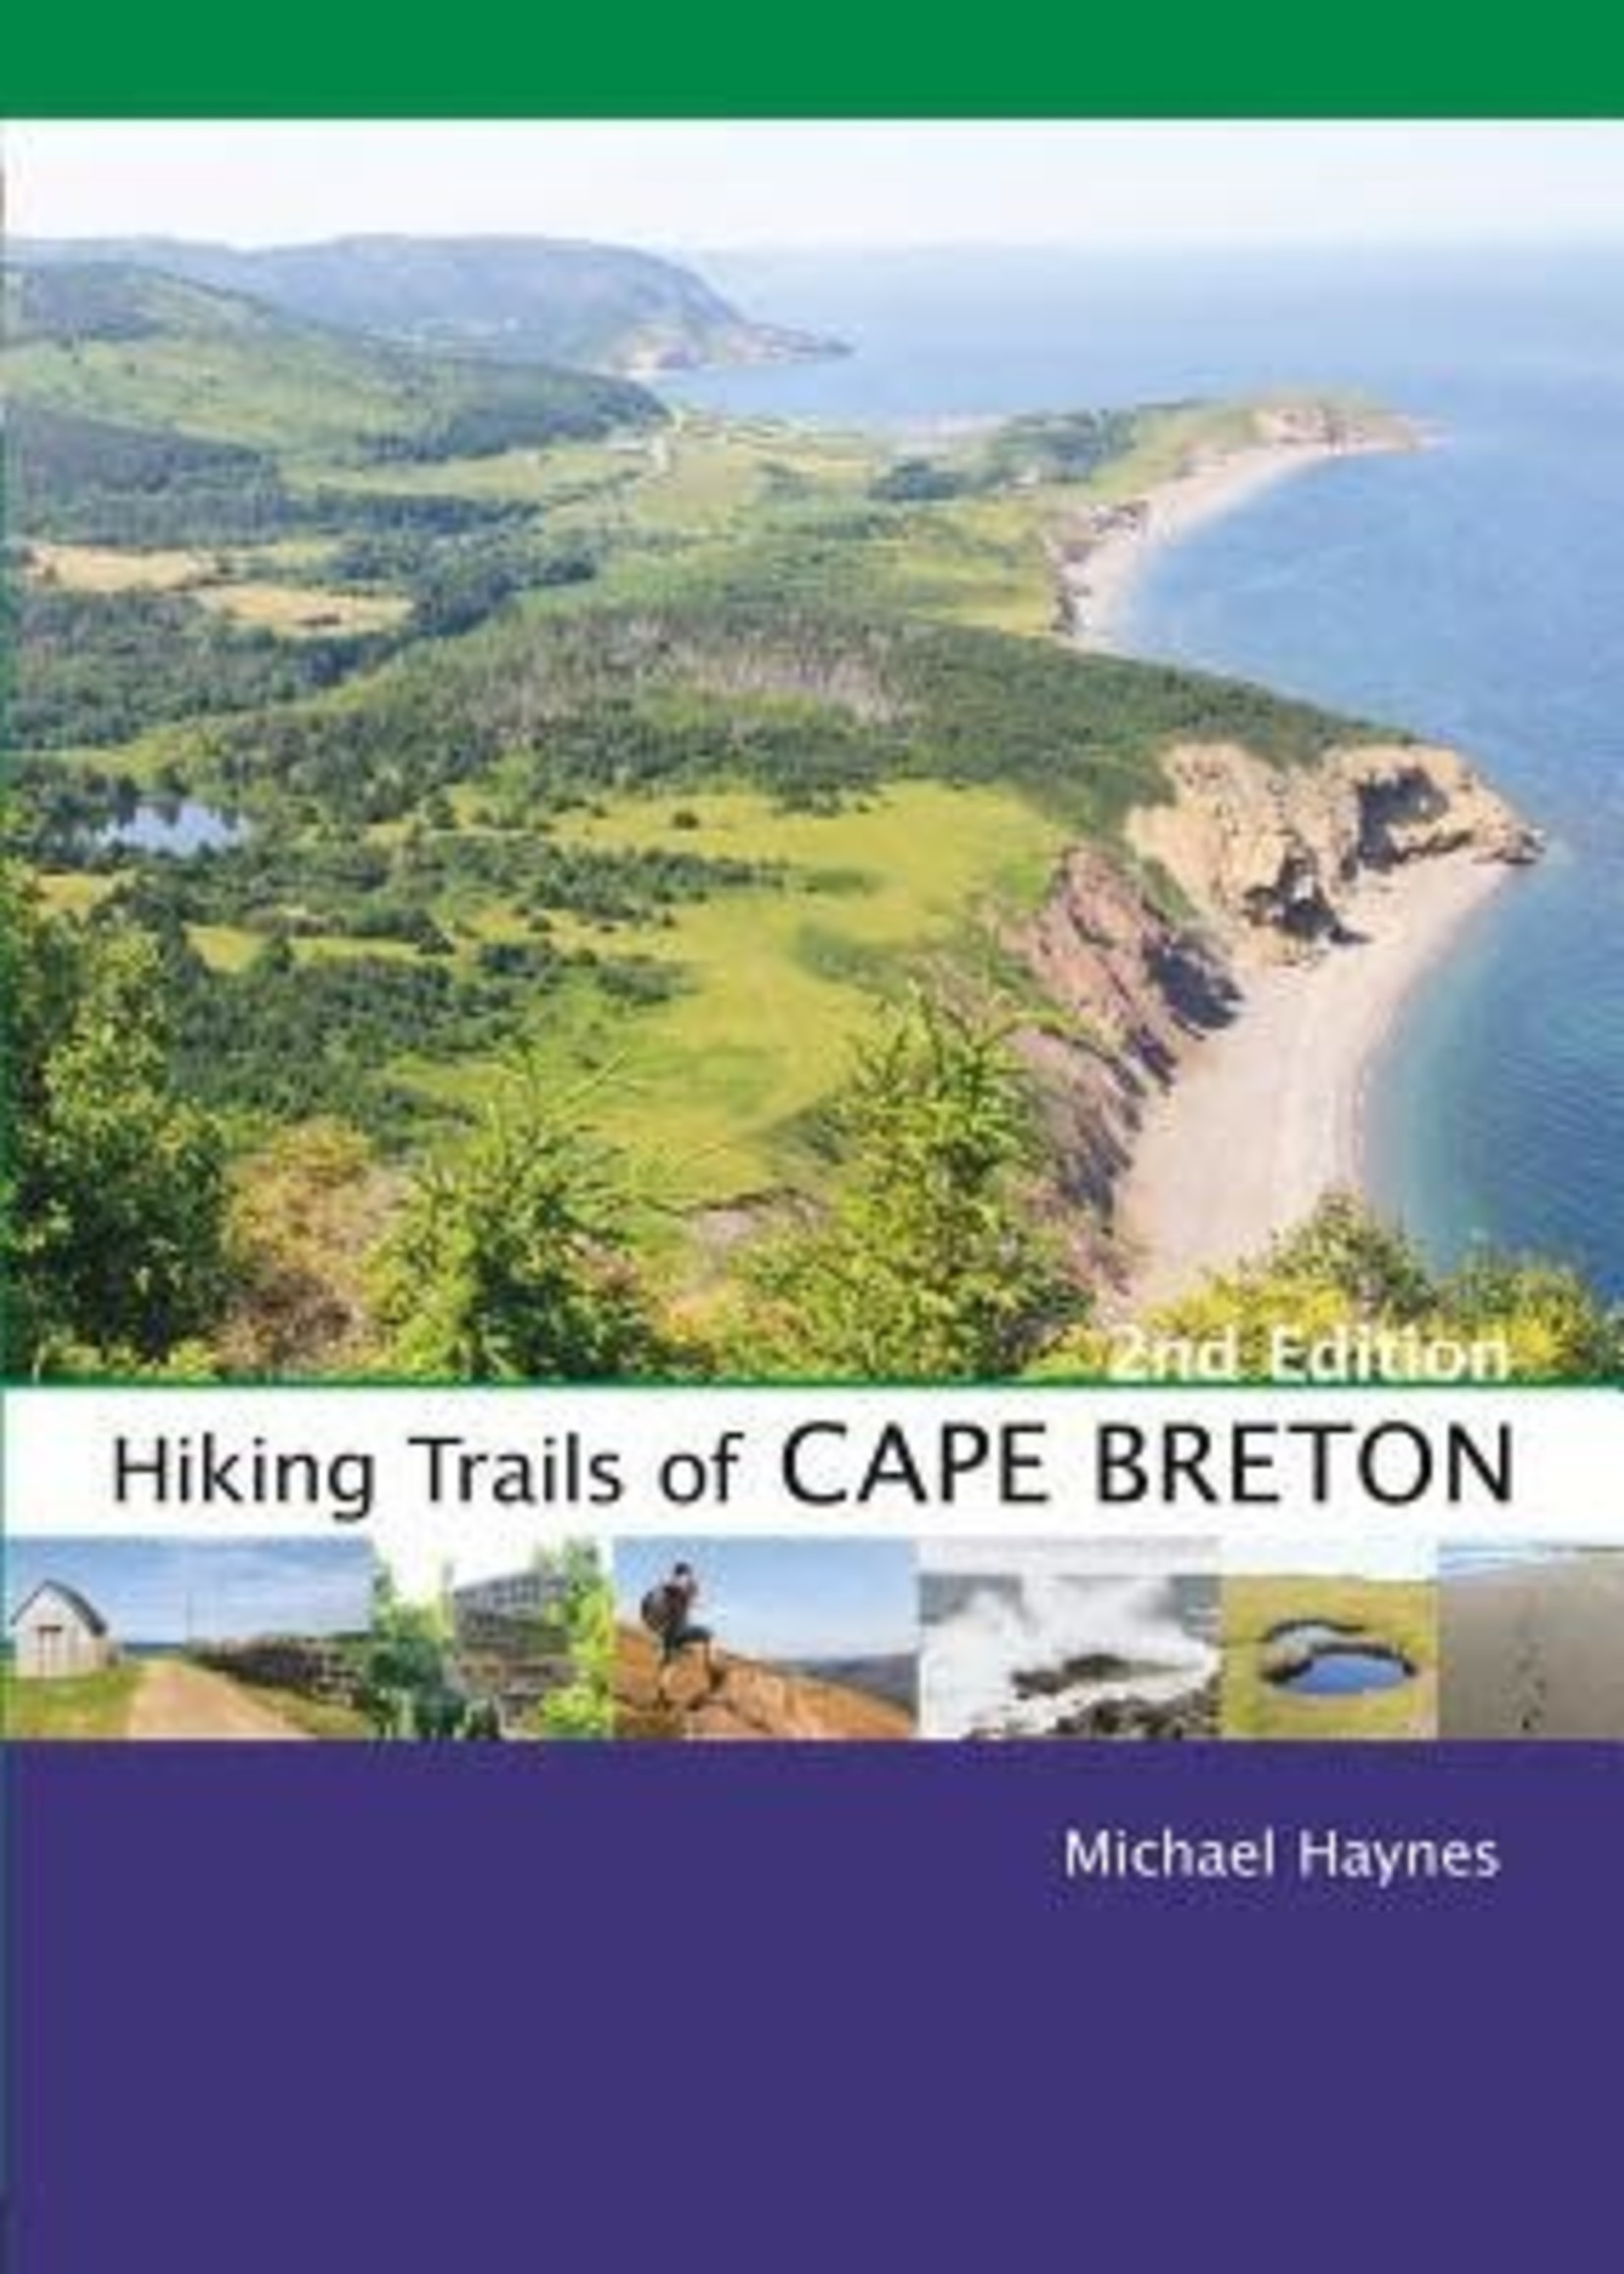 Hiking Trails of Cape Breton by Michael Haynes